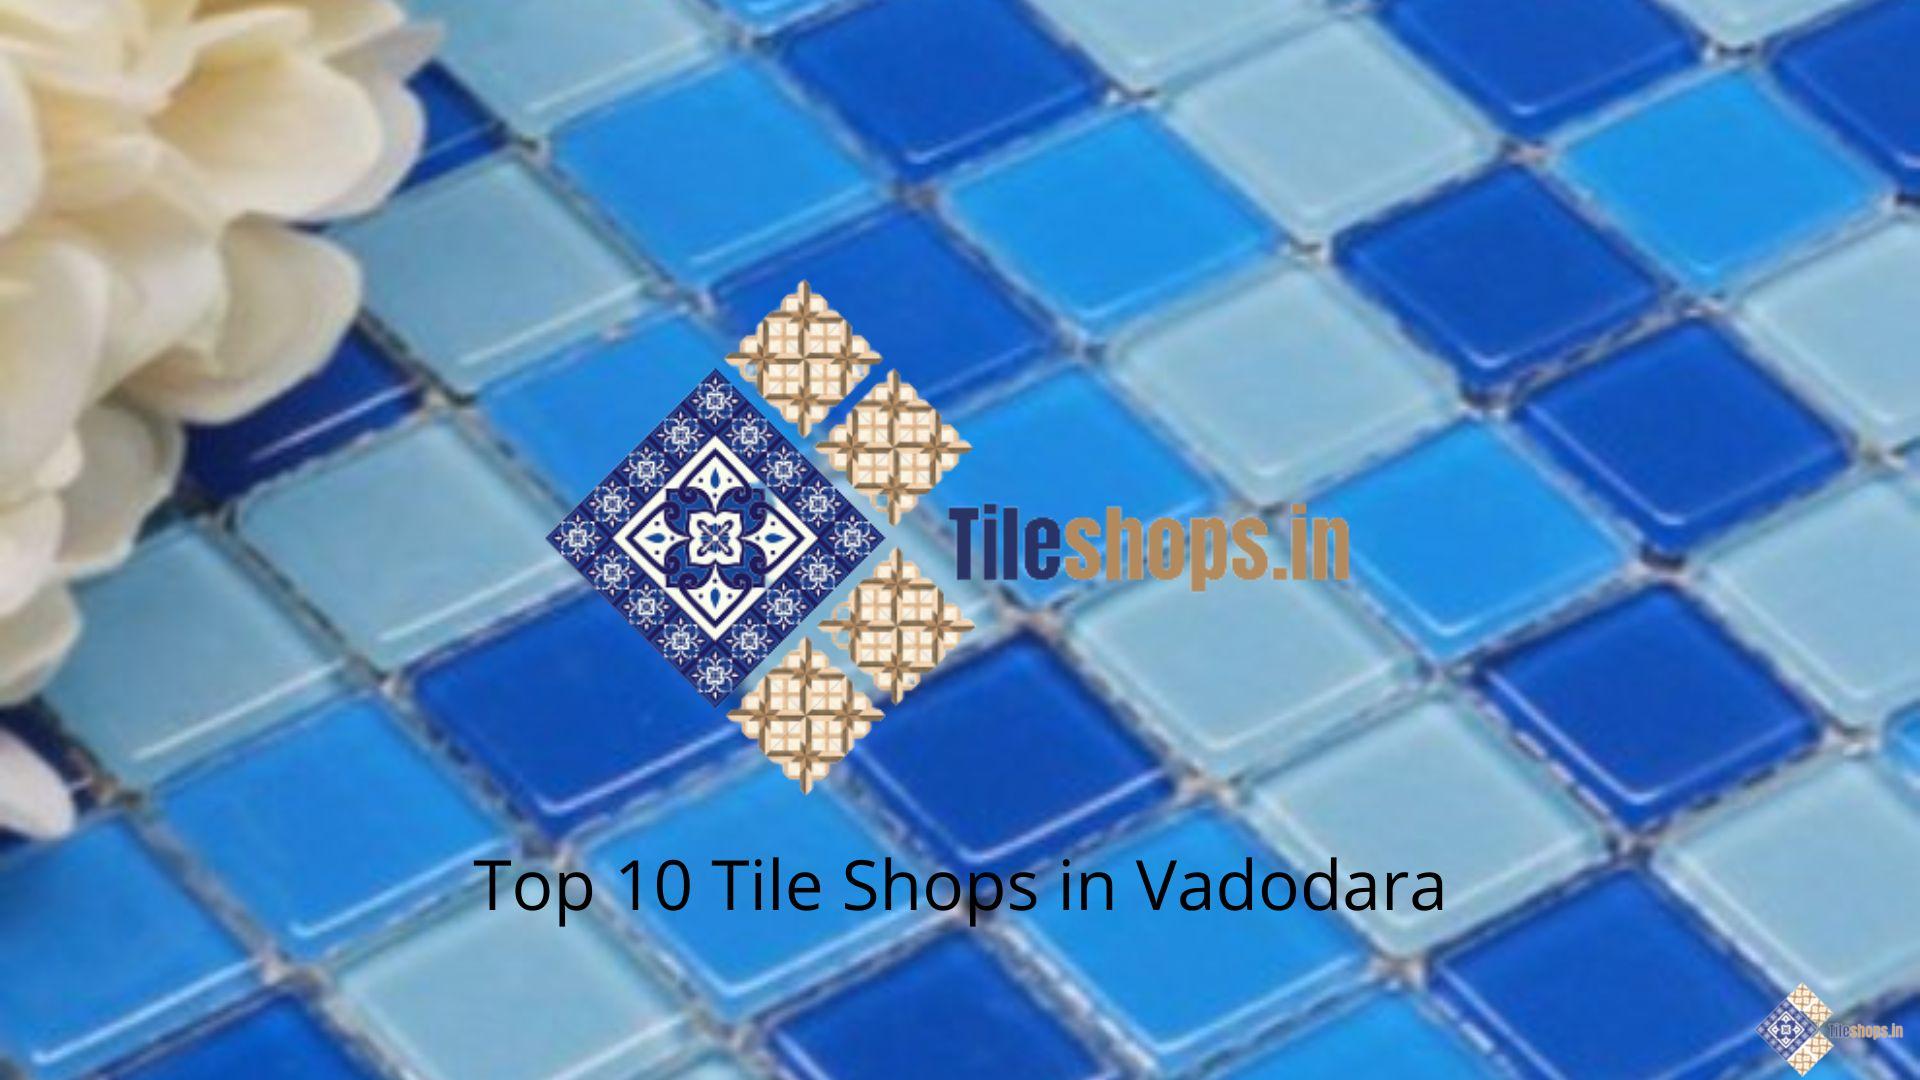 Top 10 Tile Shops in Vadodara